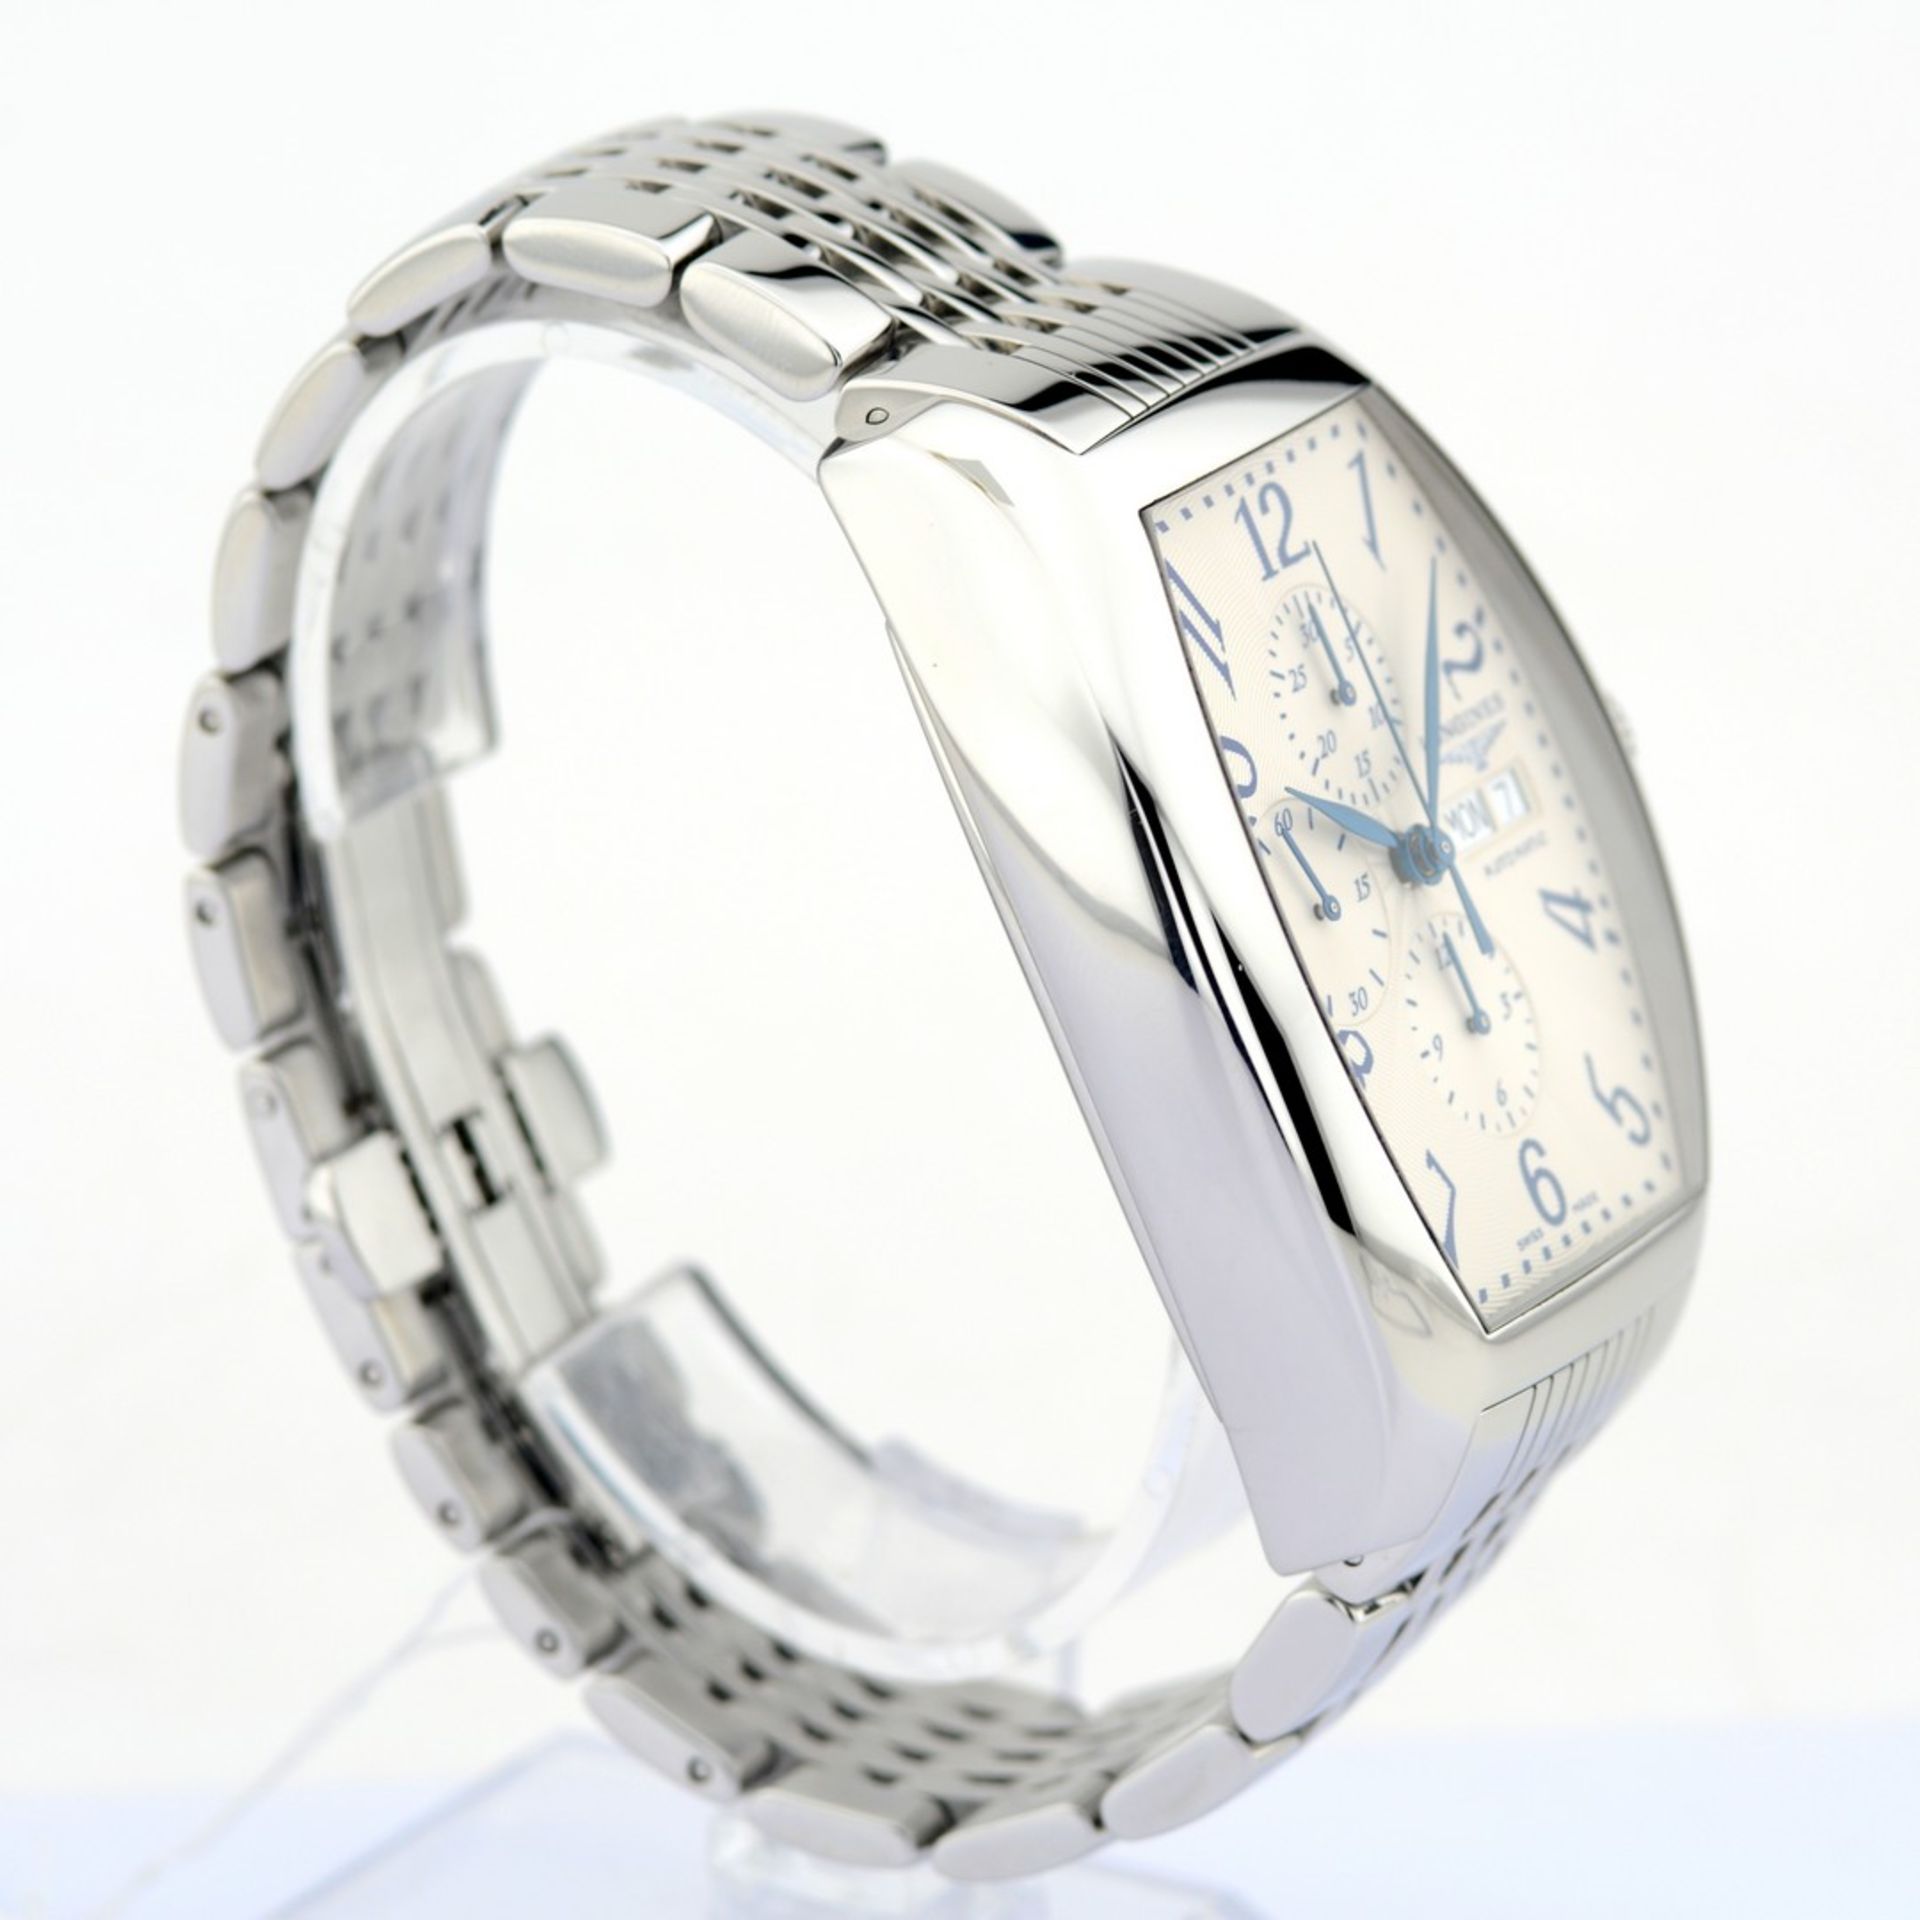 Longines / Longines Evidenza XL 56 mm Chronographe Day Date - Gentlemen's Steel Wristwatch - Image 5 of 9